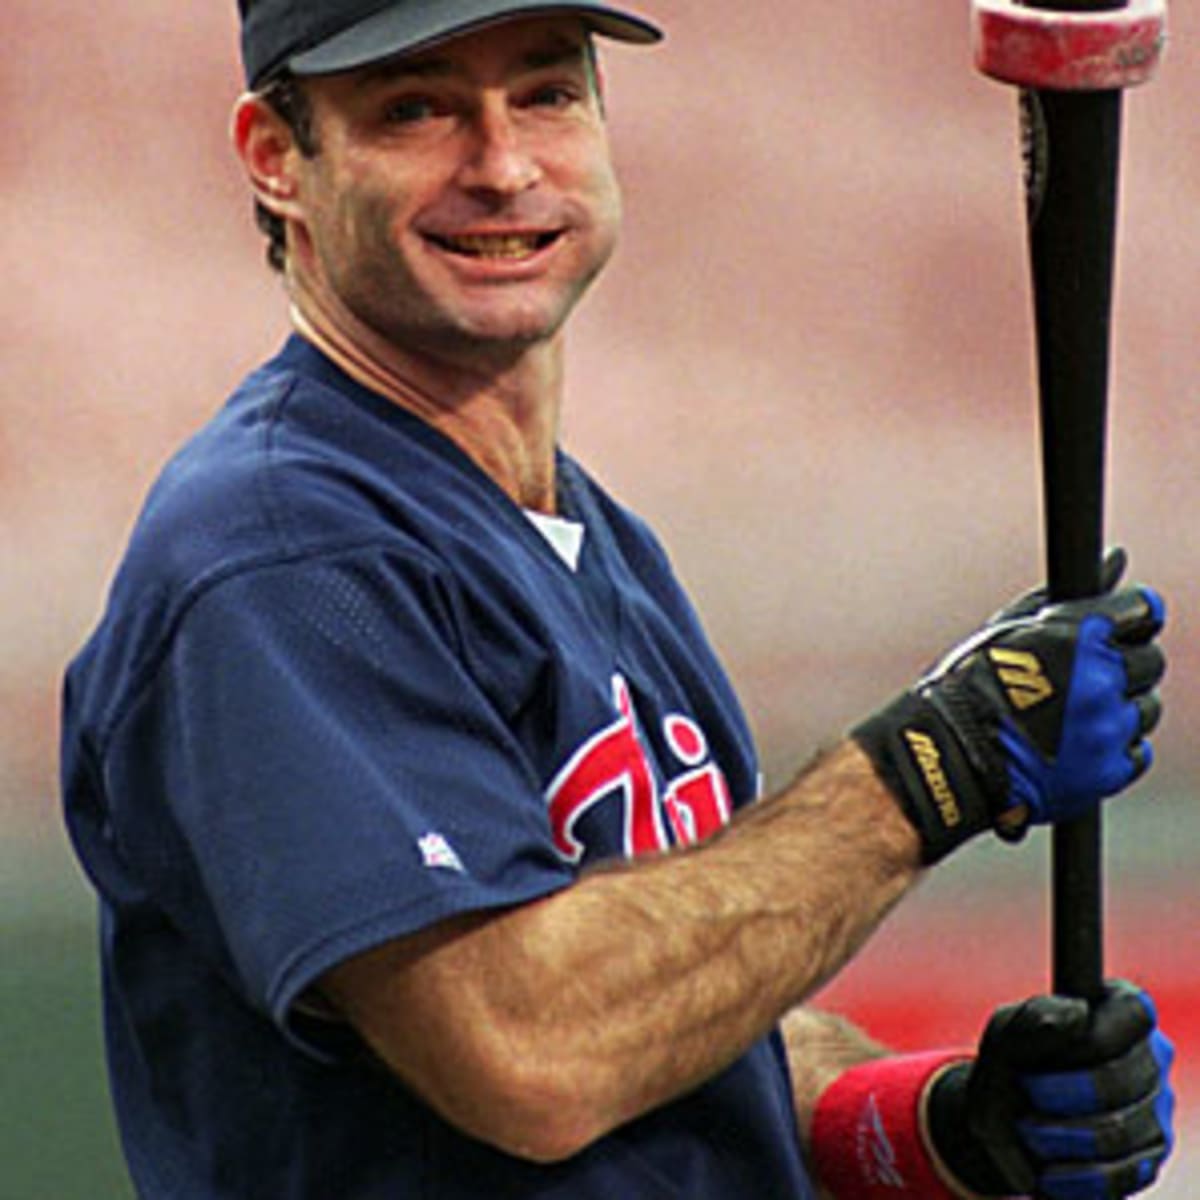 Paul Molitor, Baseball Wiki